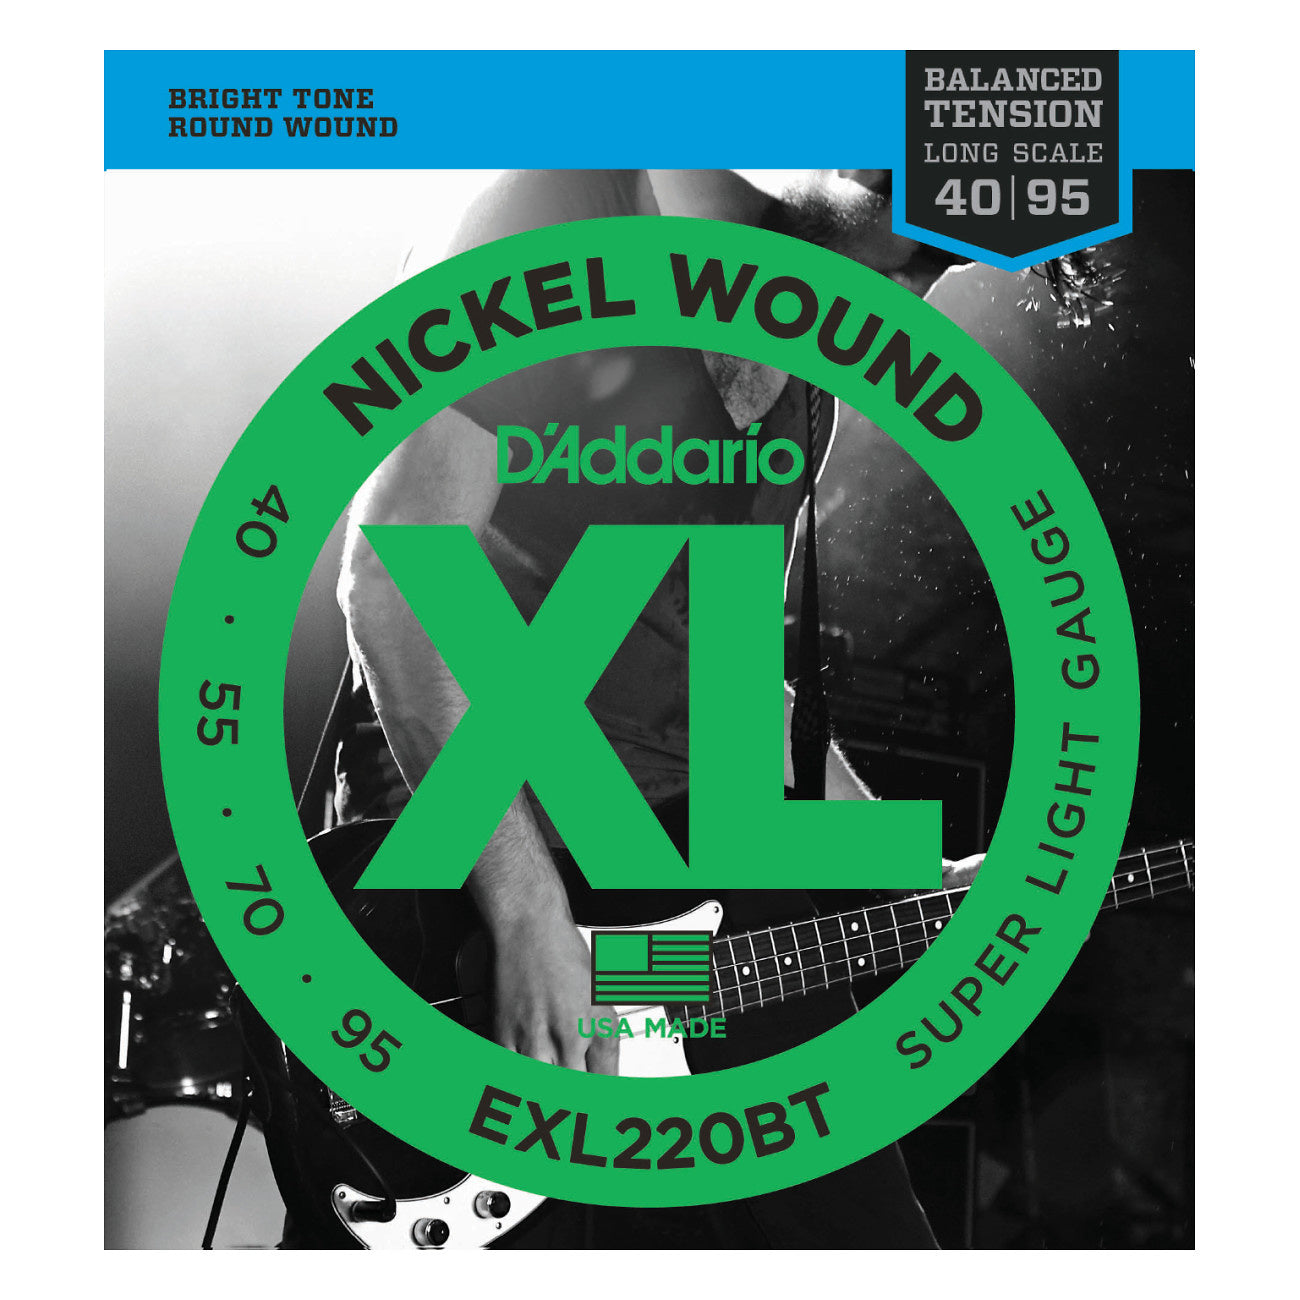 D'Addario EXLBT Balanced Tension Nickel Wound Electric Bass Strings, EXL220BT, Super Light, 40-95